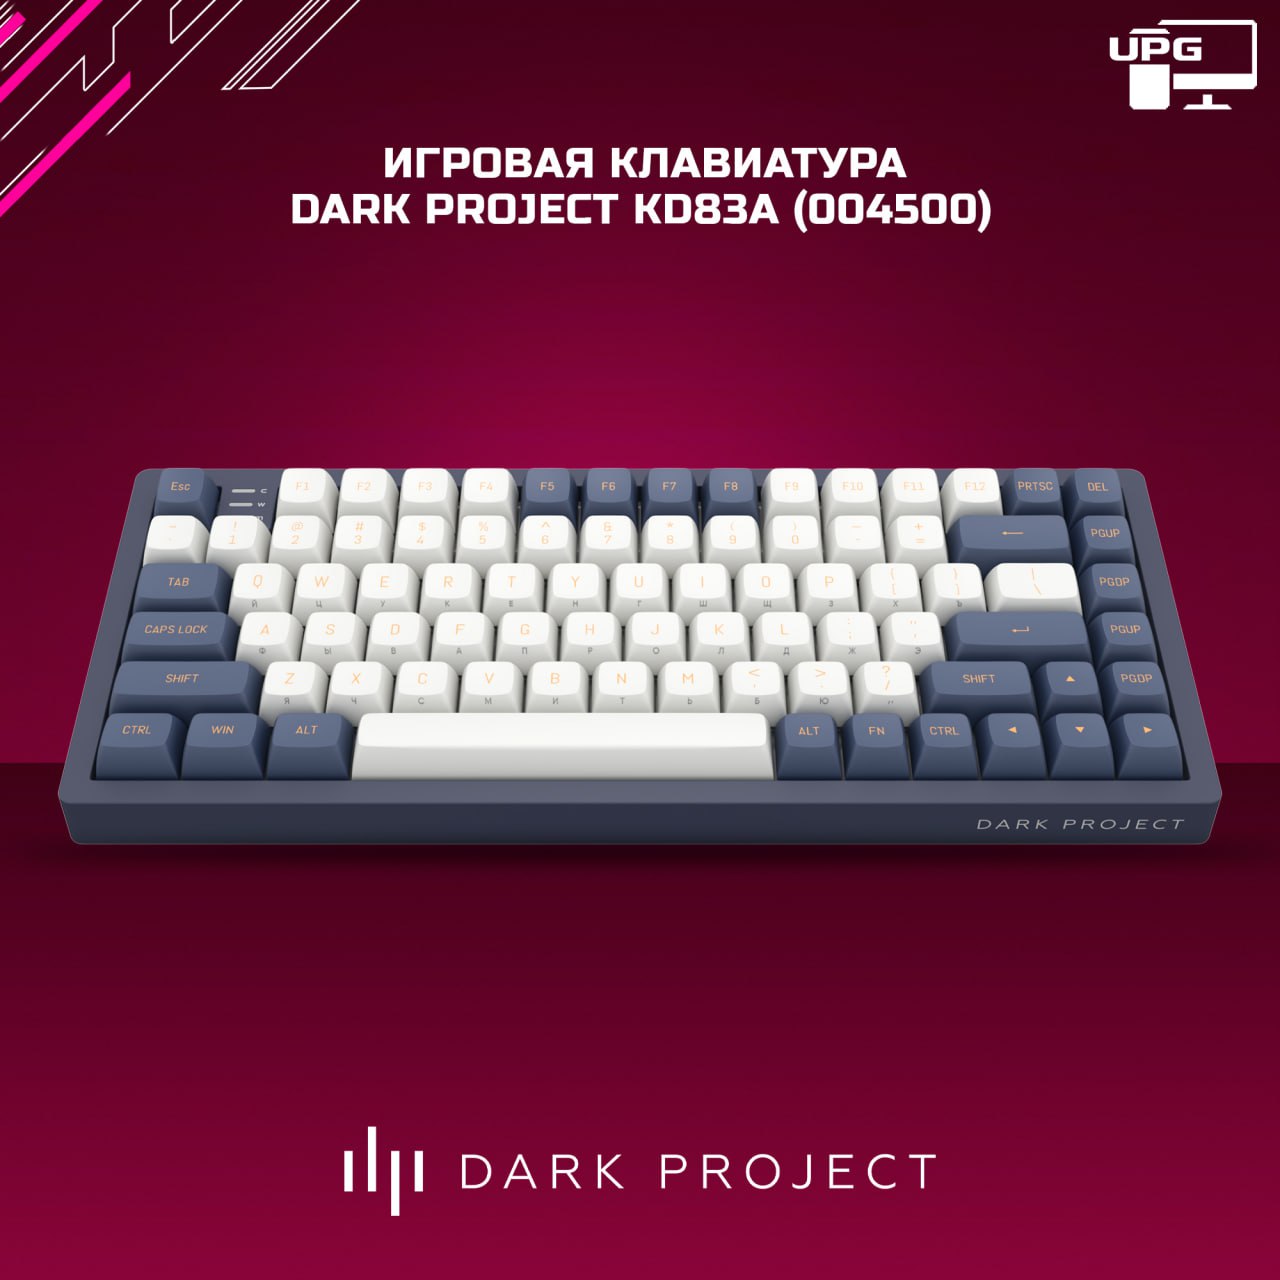 Дарк проджект kd83 g3ms magnetite. KD 83 A дарк Проджект. Dark Project kd83a. Sapphire переключатели клавиатура. Kd83a.